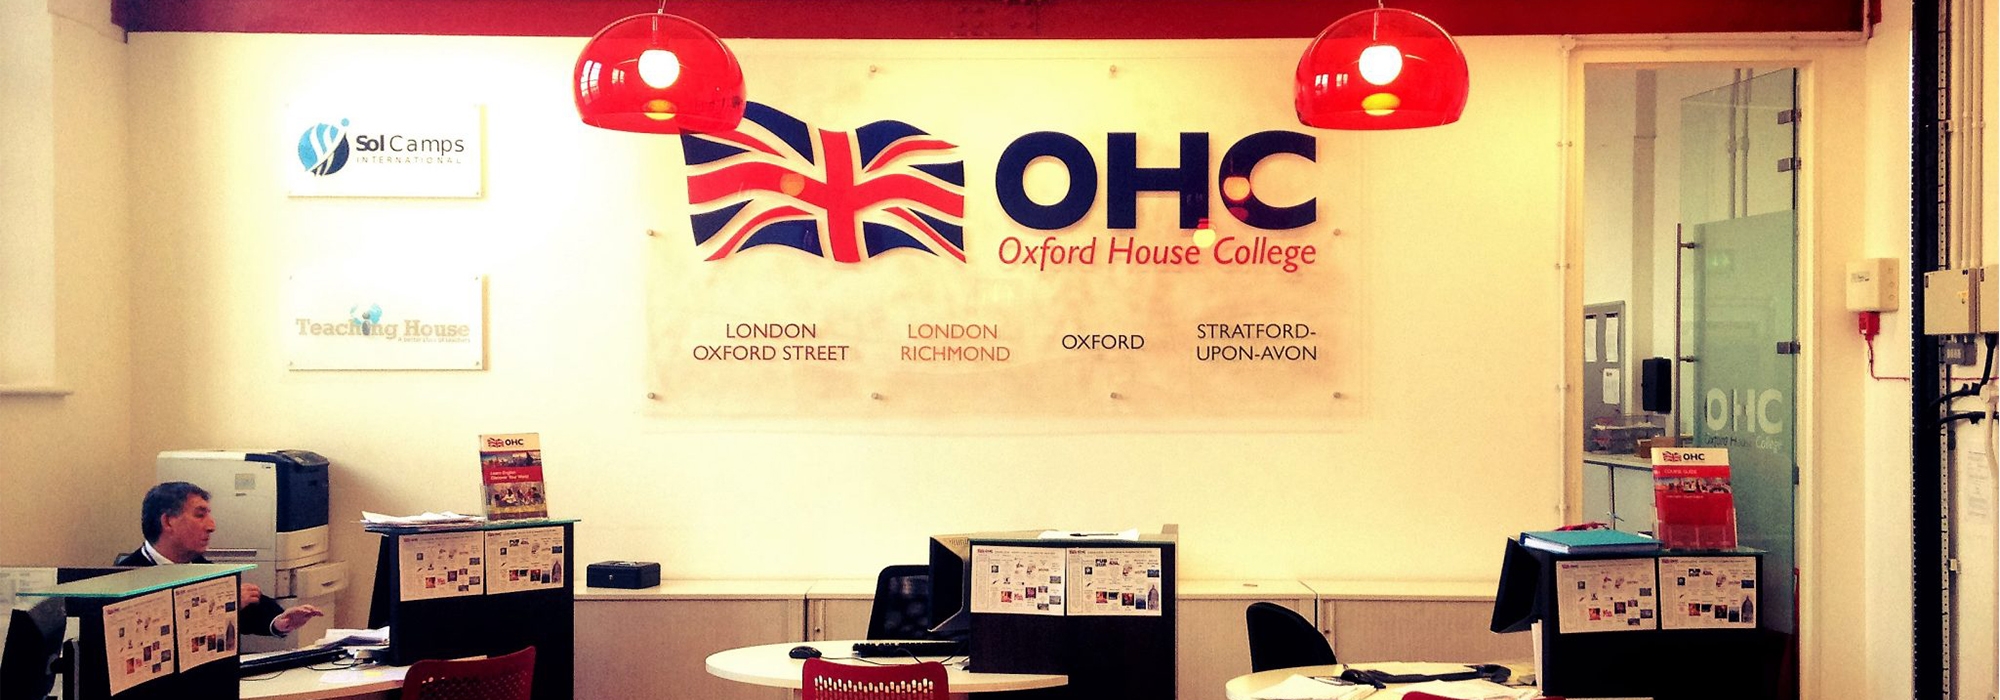 Oxford House College Londra (Oxford Street)